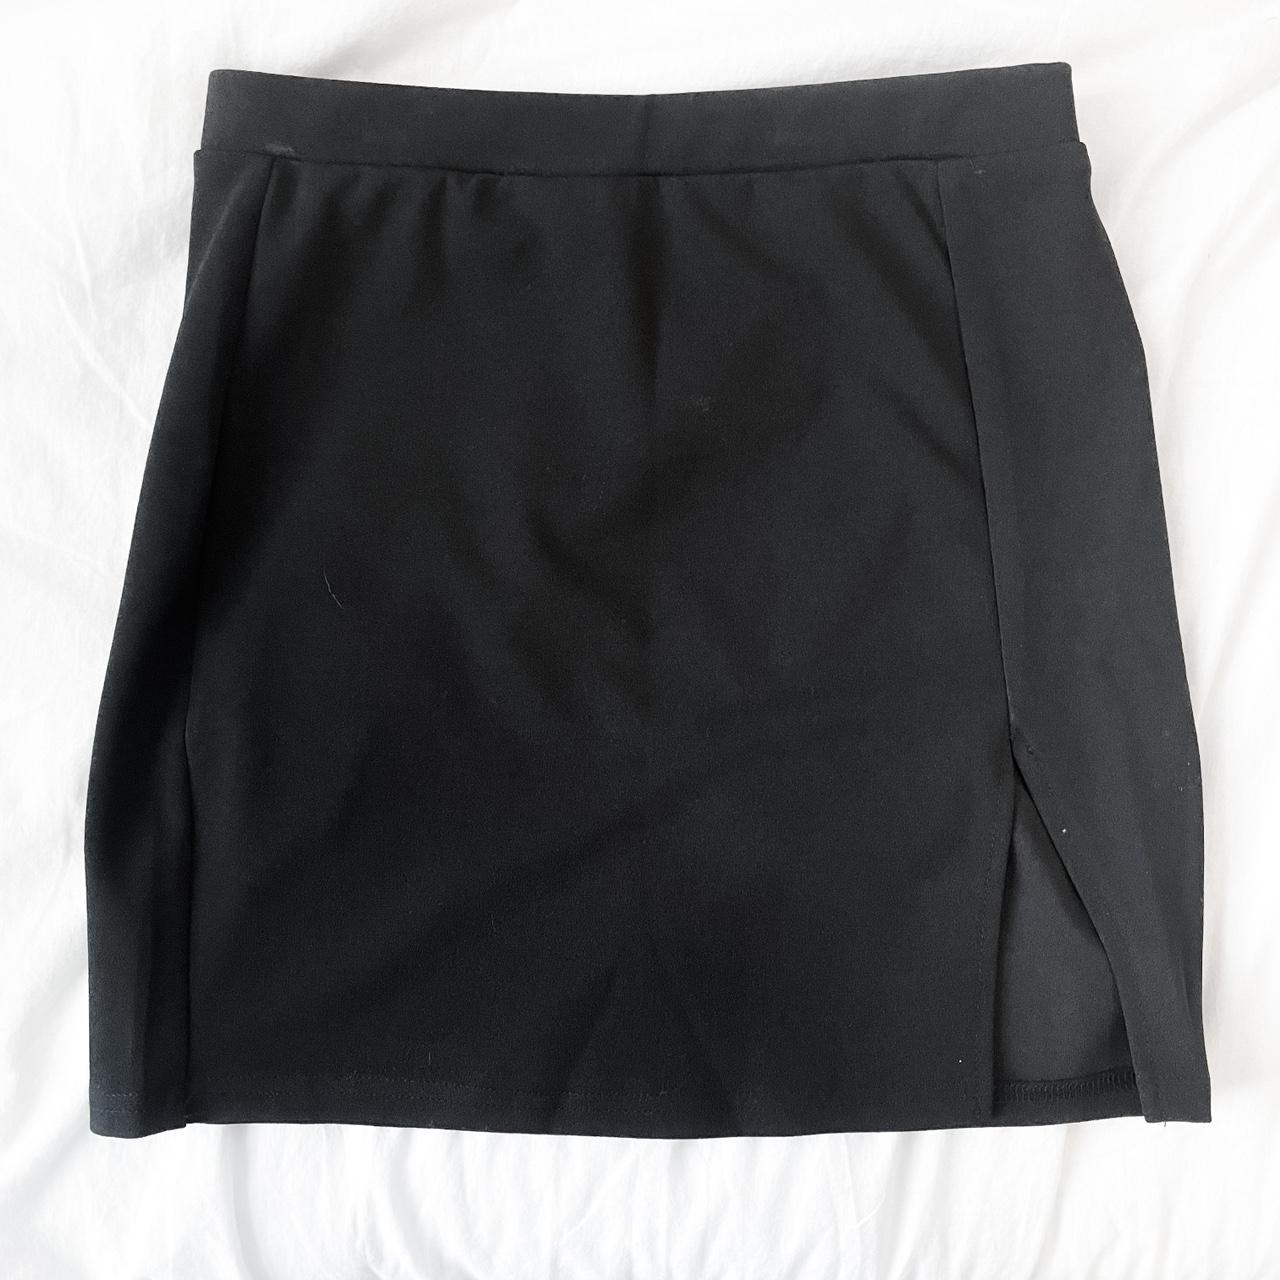 Black high waisted mini skirt Slit hem No... - Depop